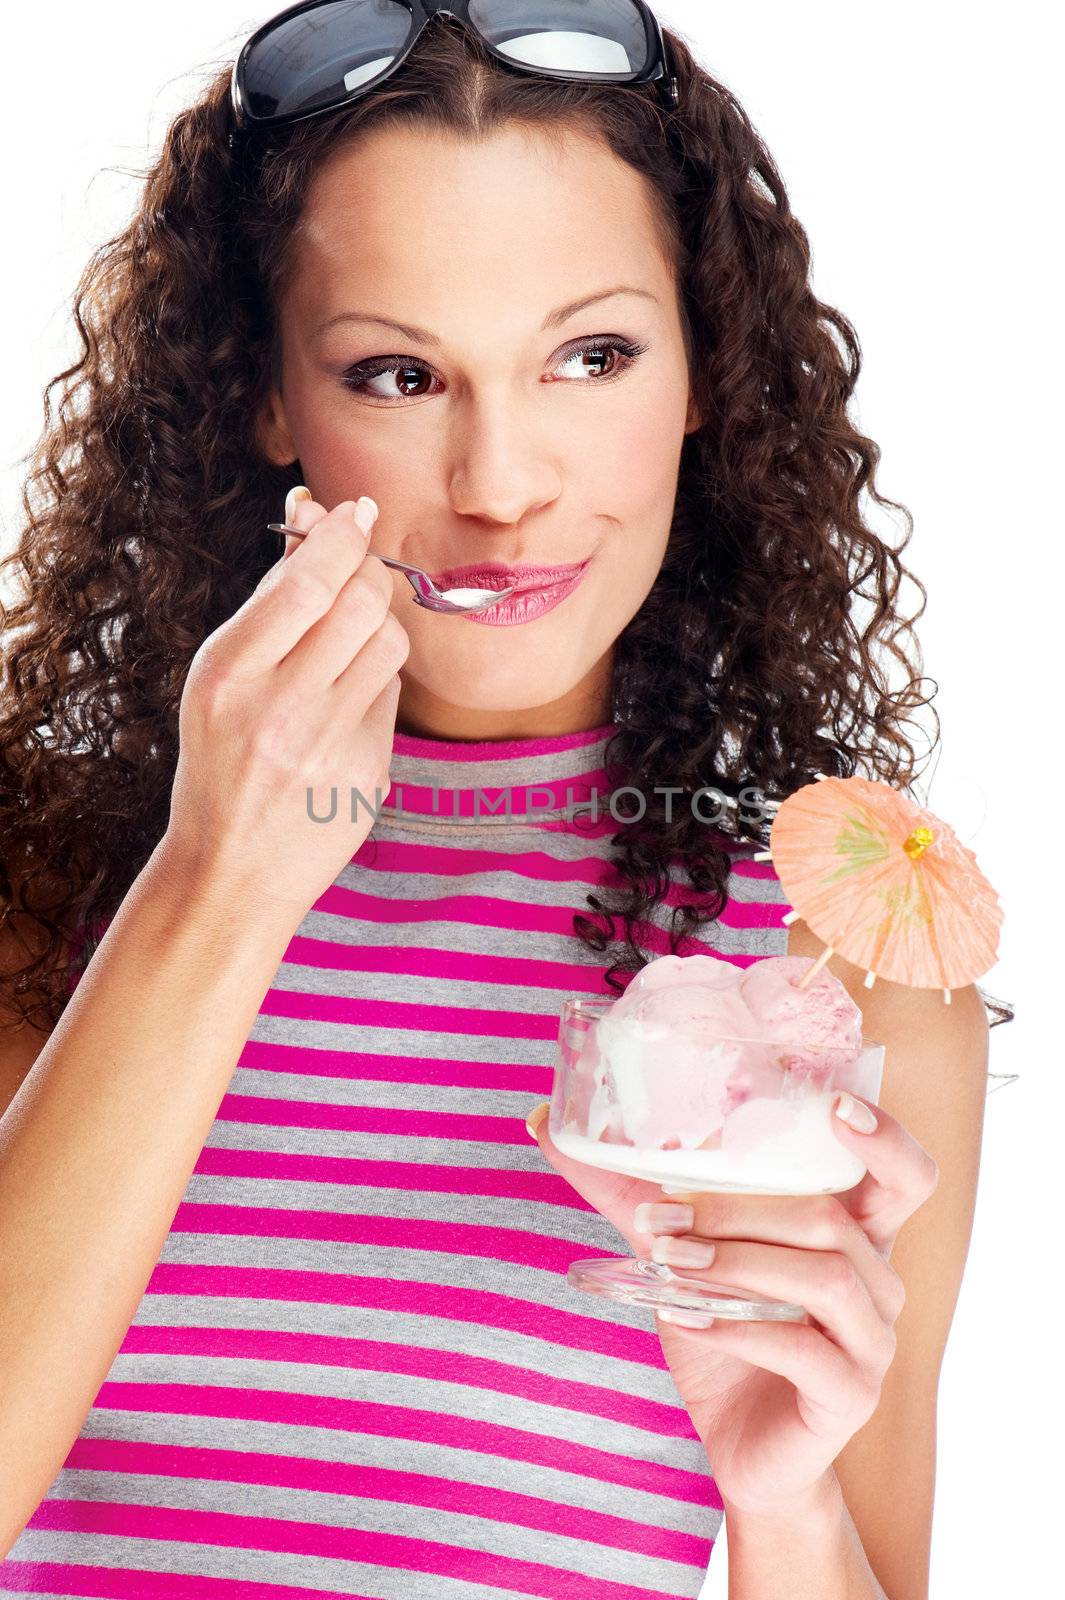 Woman eating ice cream by imarin